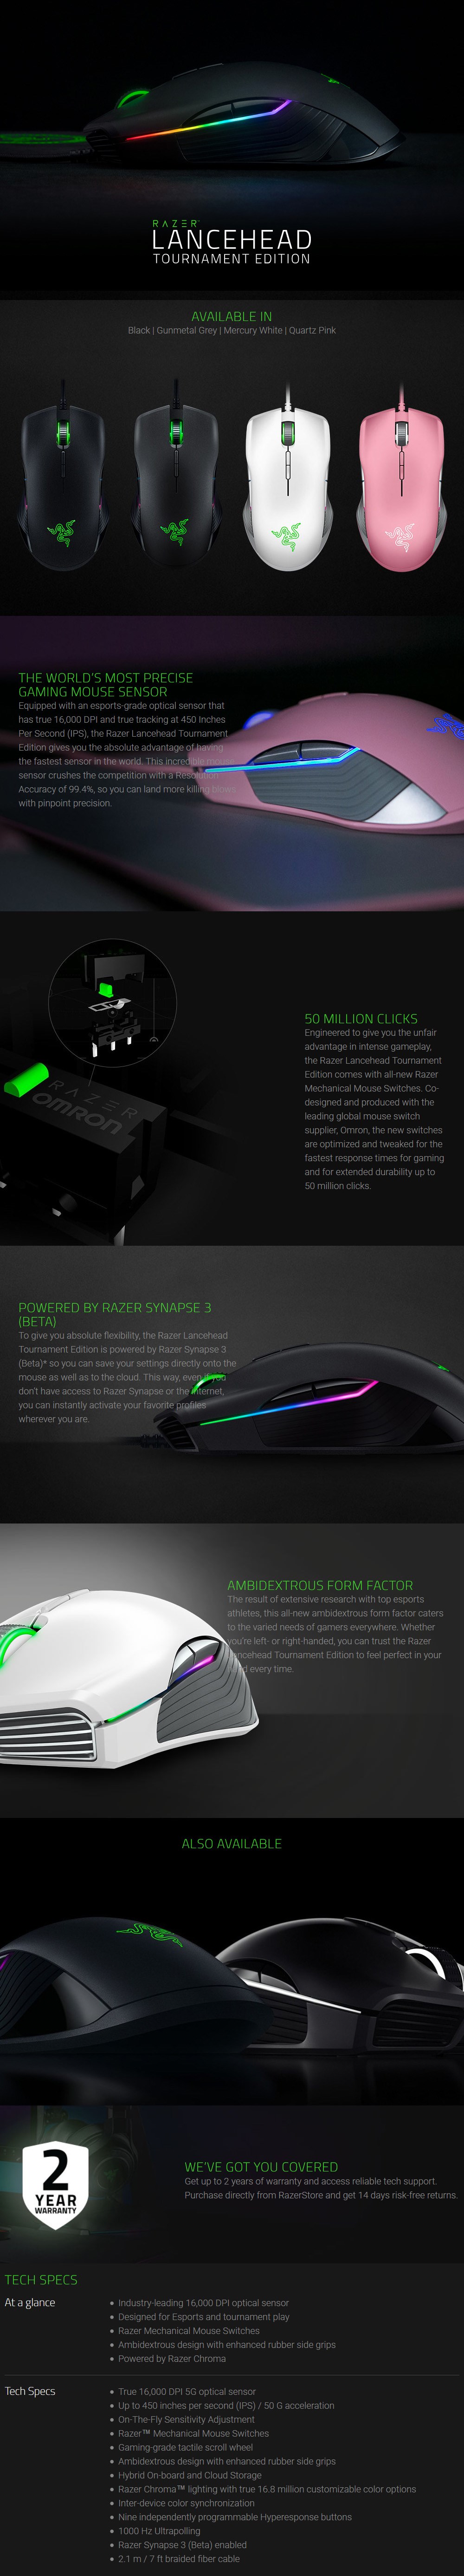 Razer Lancehead Tournament Edition Ambidextrous Gaming Mouse - Mercury Edition - Desktop Overview 1